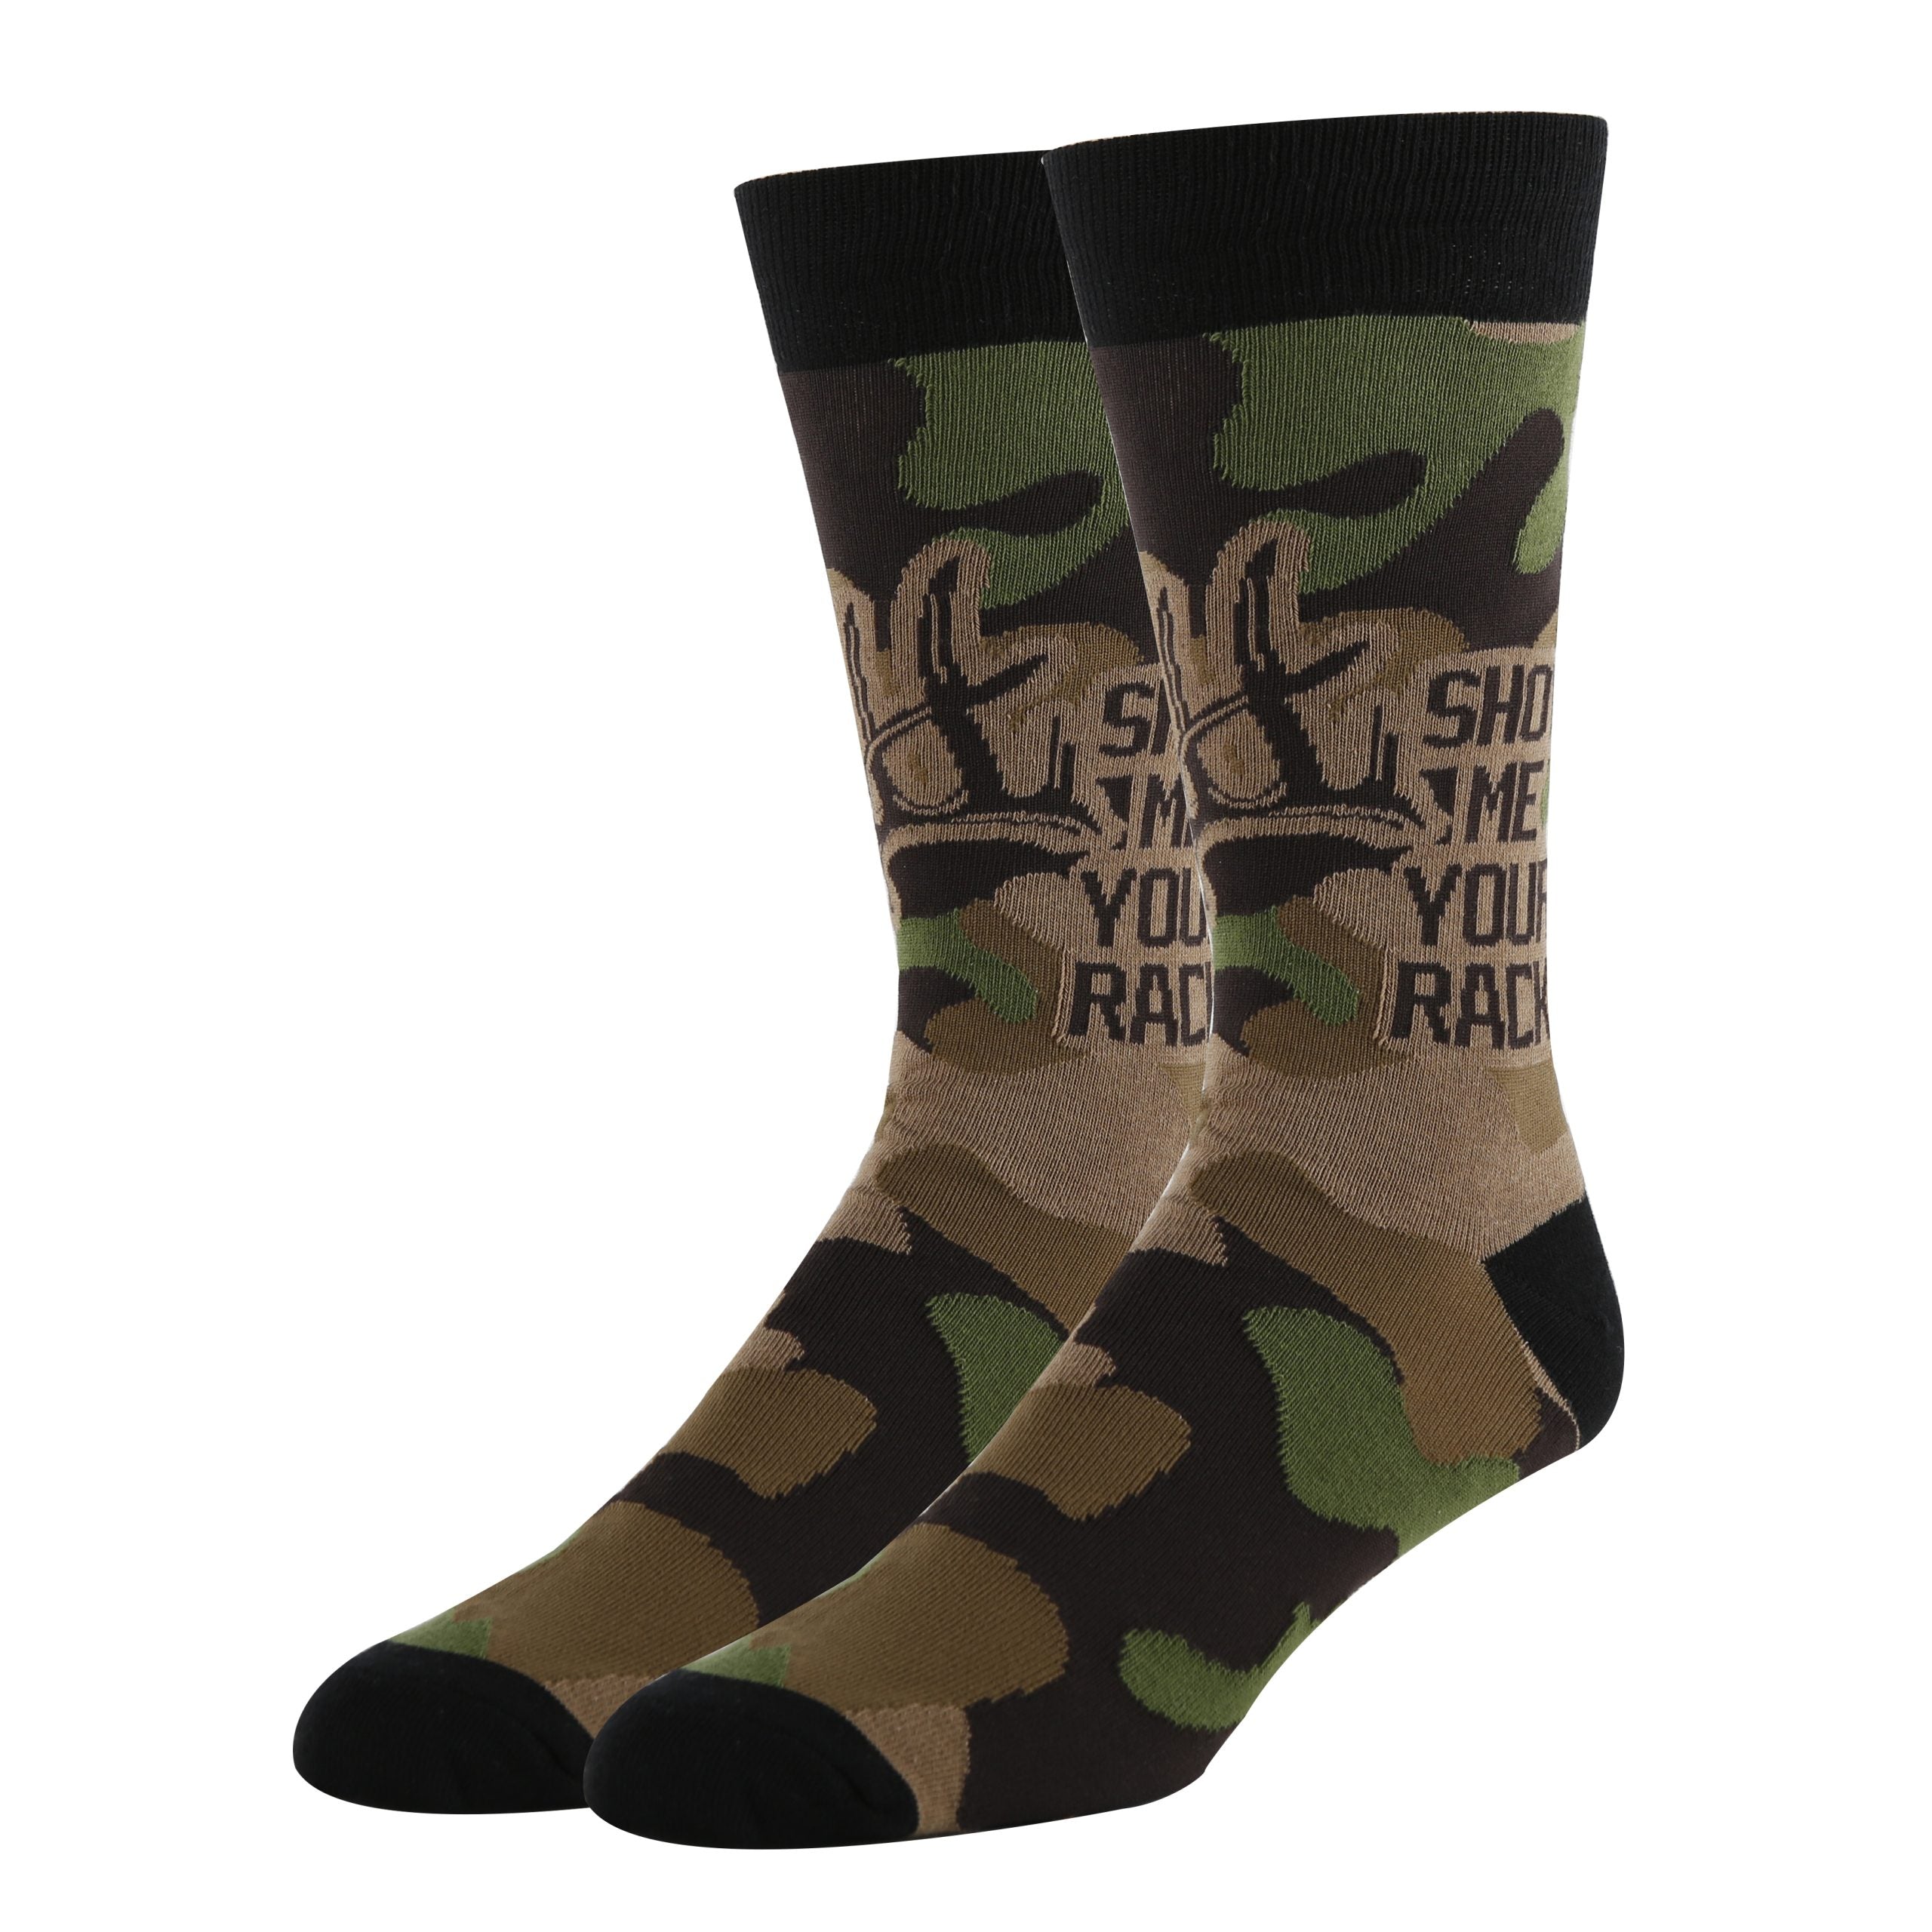 Men's Adult Humor Socks, Inappropriate Socks Multiple